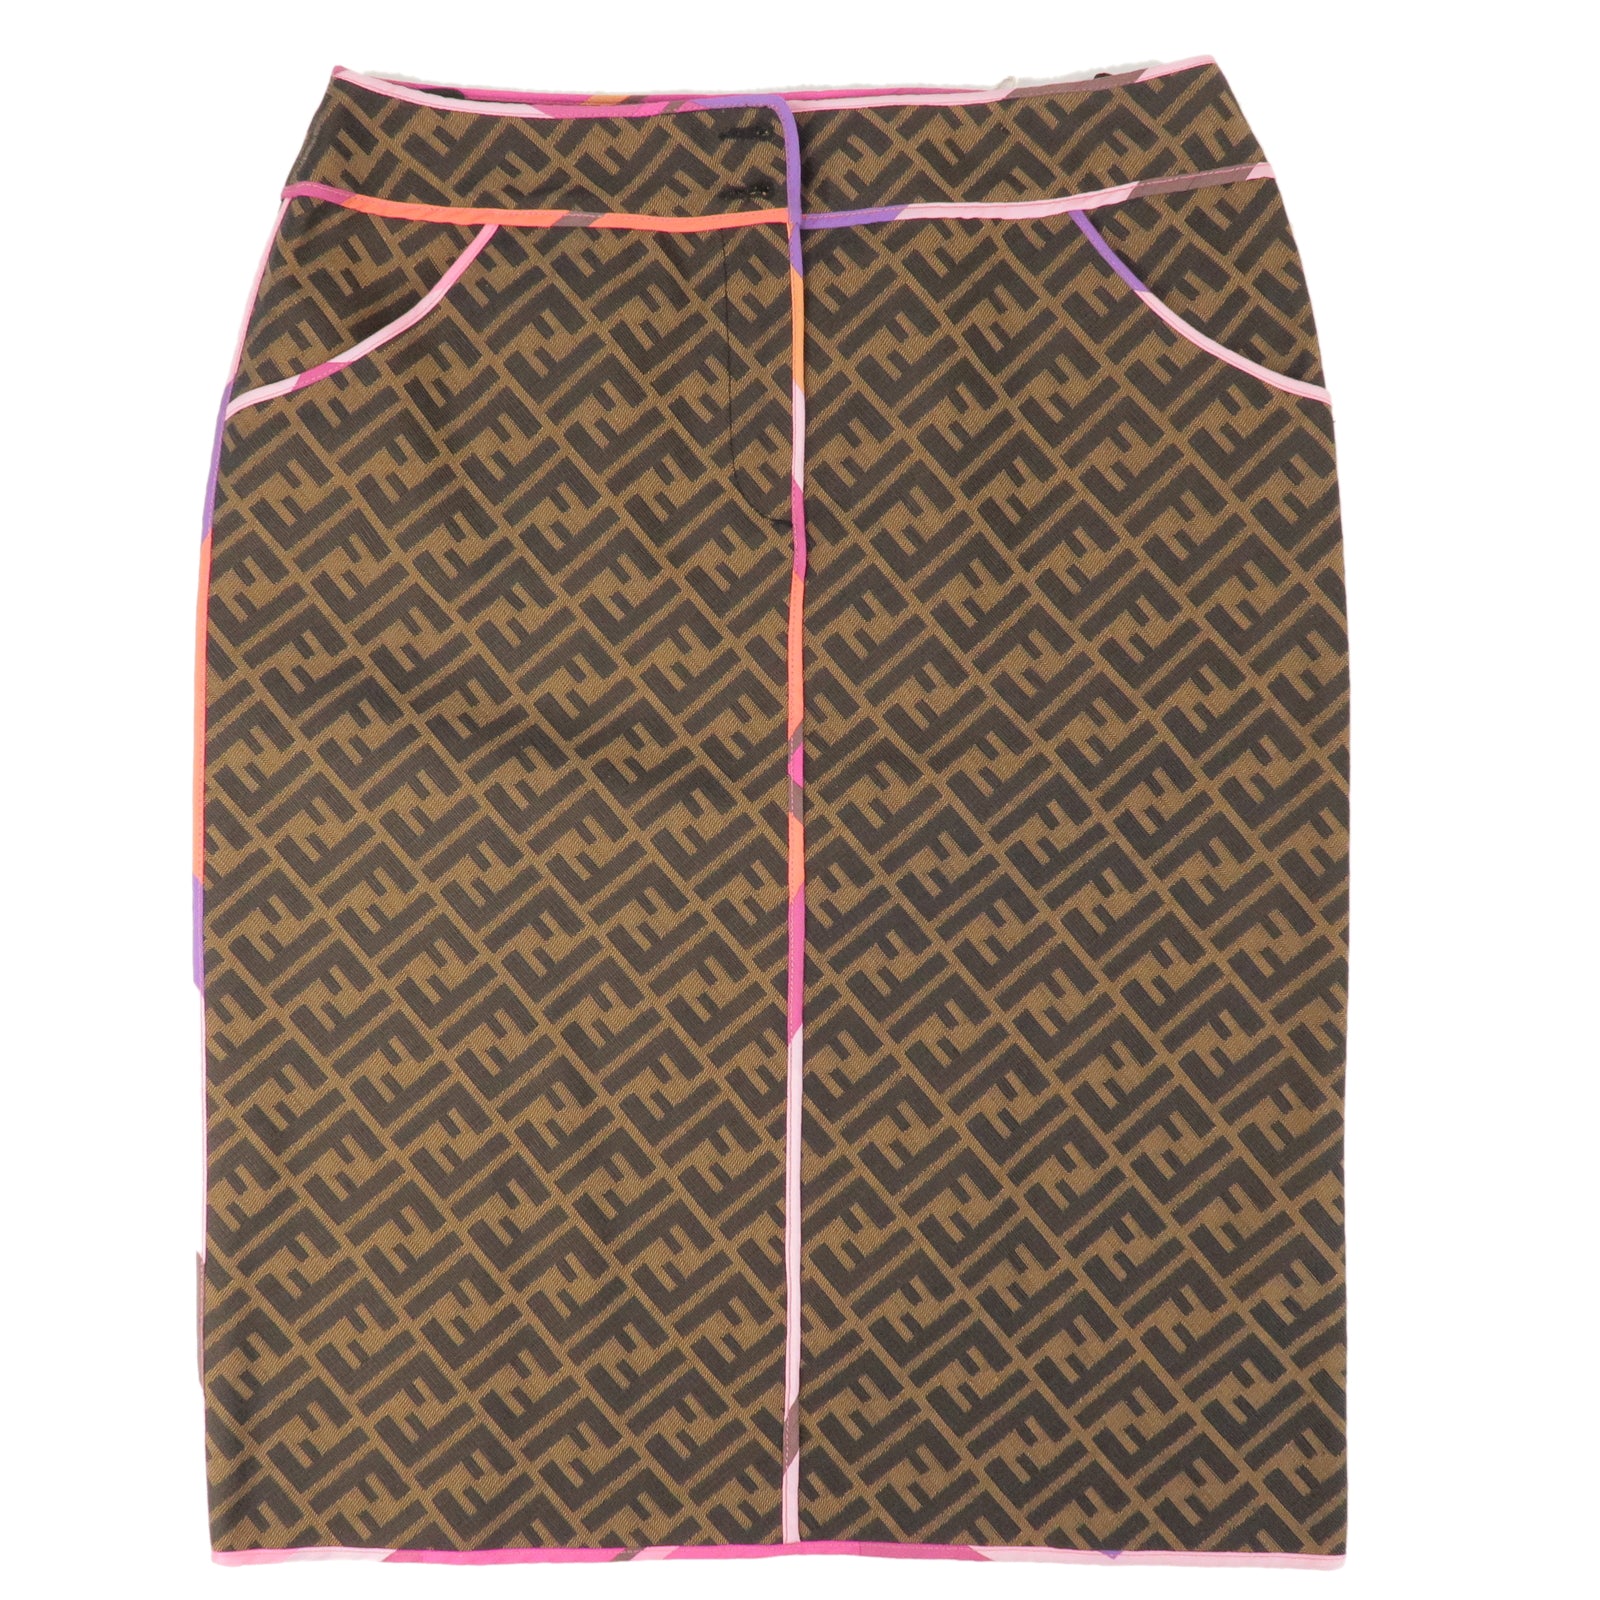 FENDI-Zucca-Tight-Skirt-Size-30-Khaki-Black-Multicolored